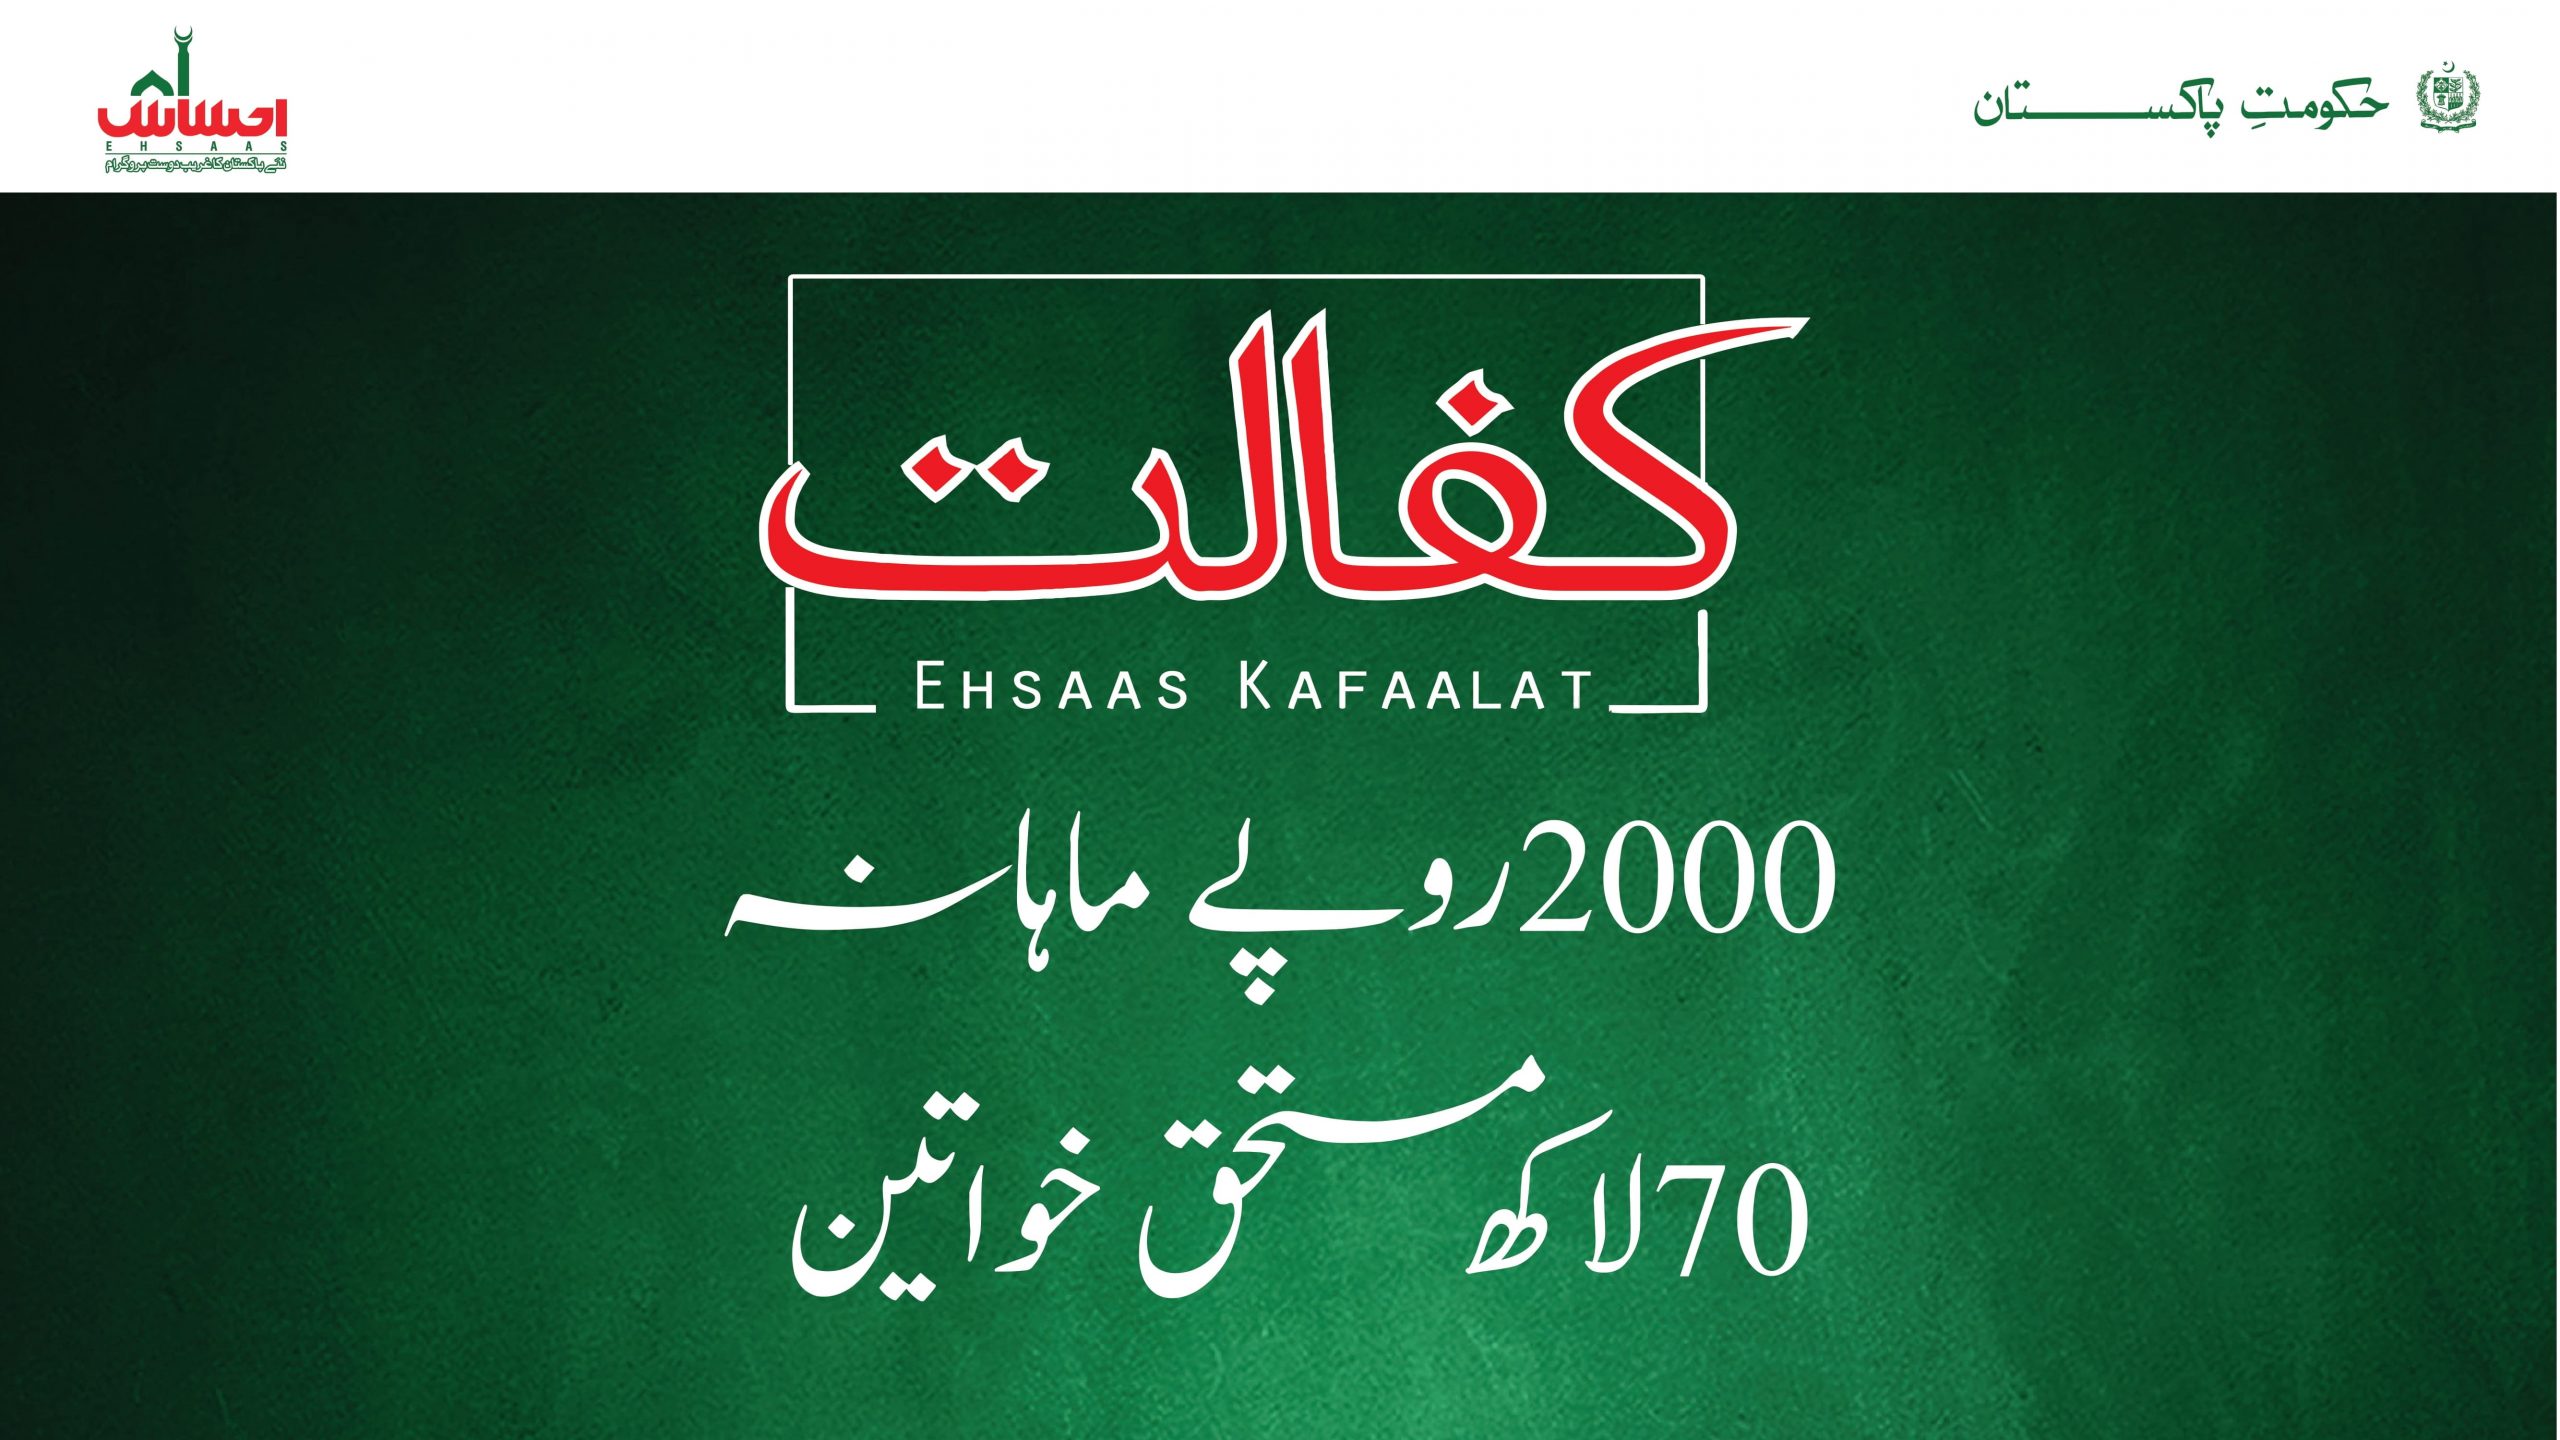 Ehsaas Kafalat Program Online Registration 2021